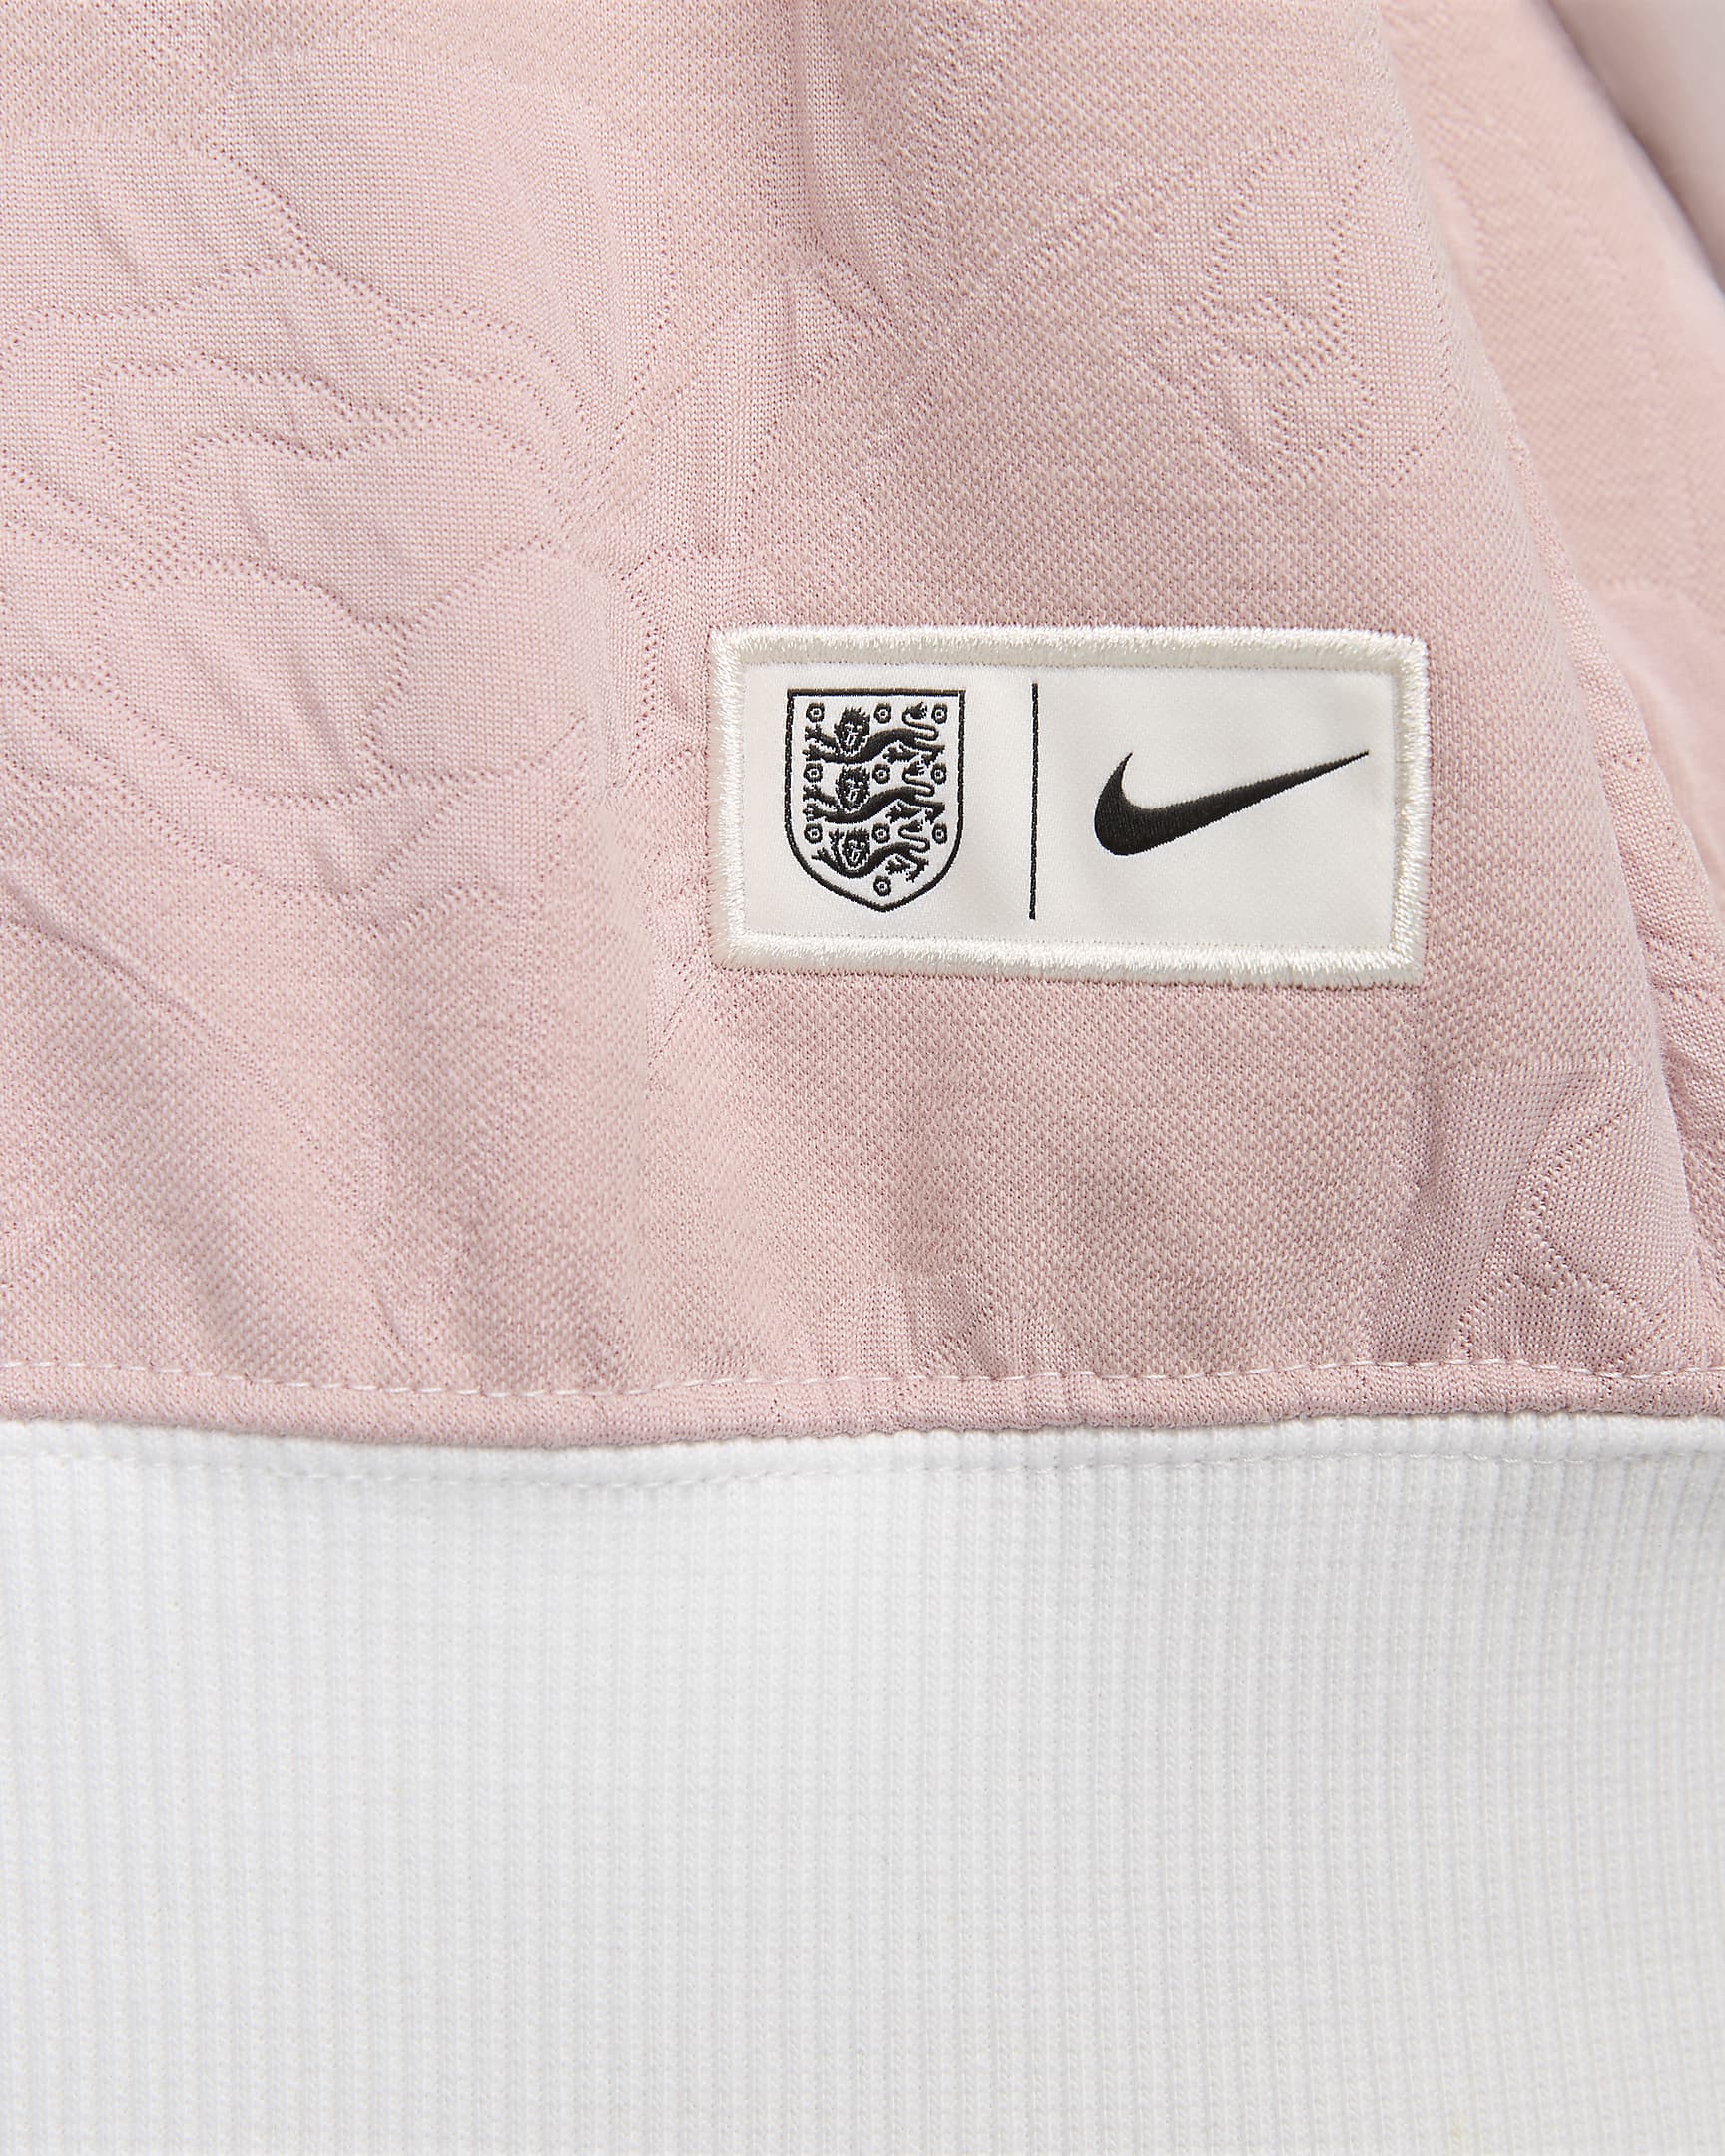 England Women's Nike Fleece Pullover Hoodie. Nike NZ